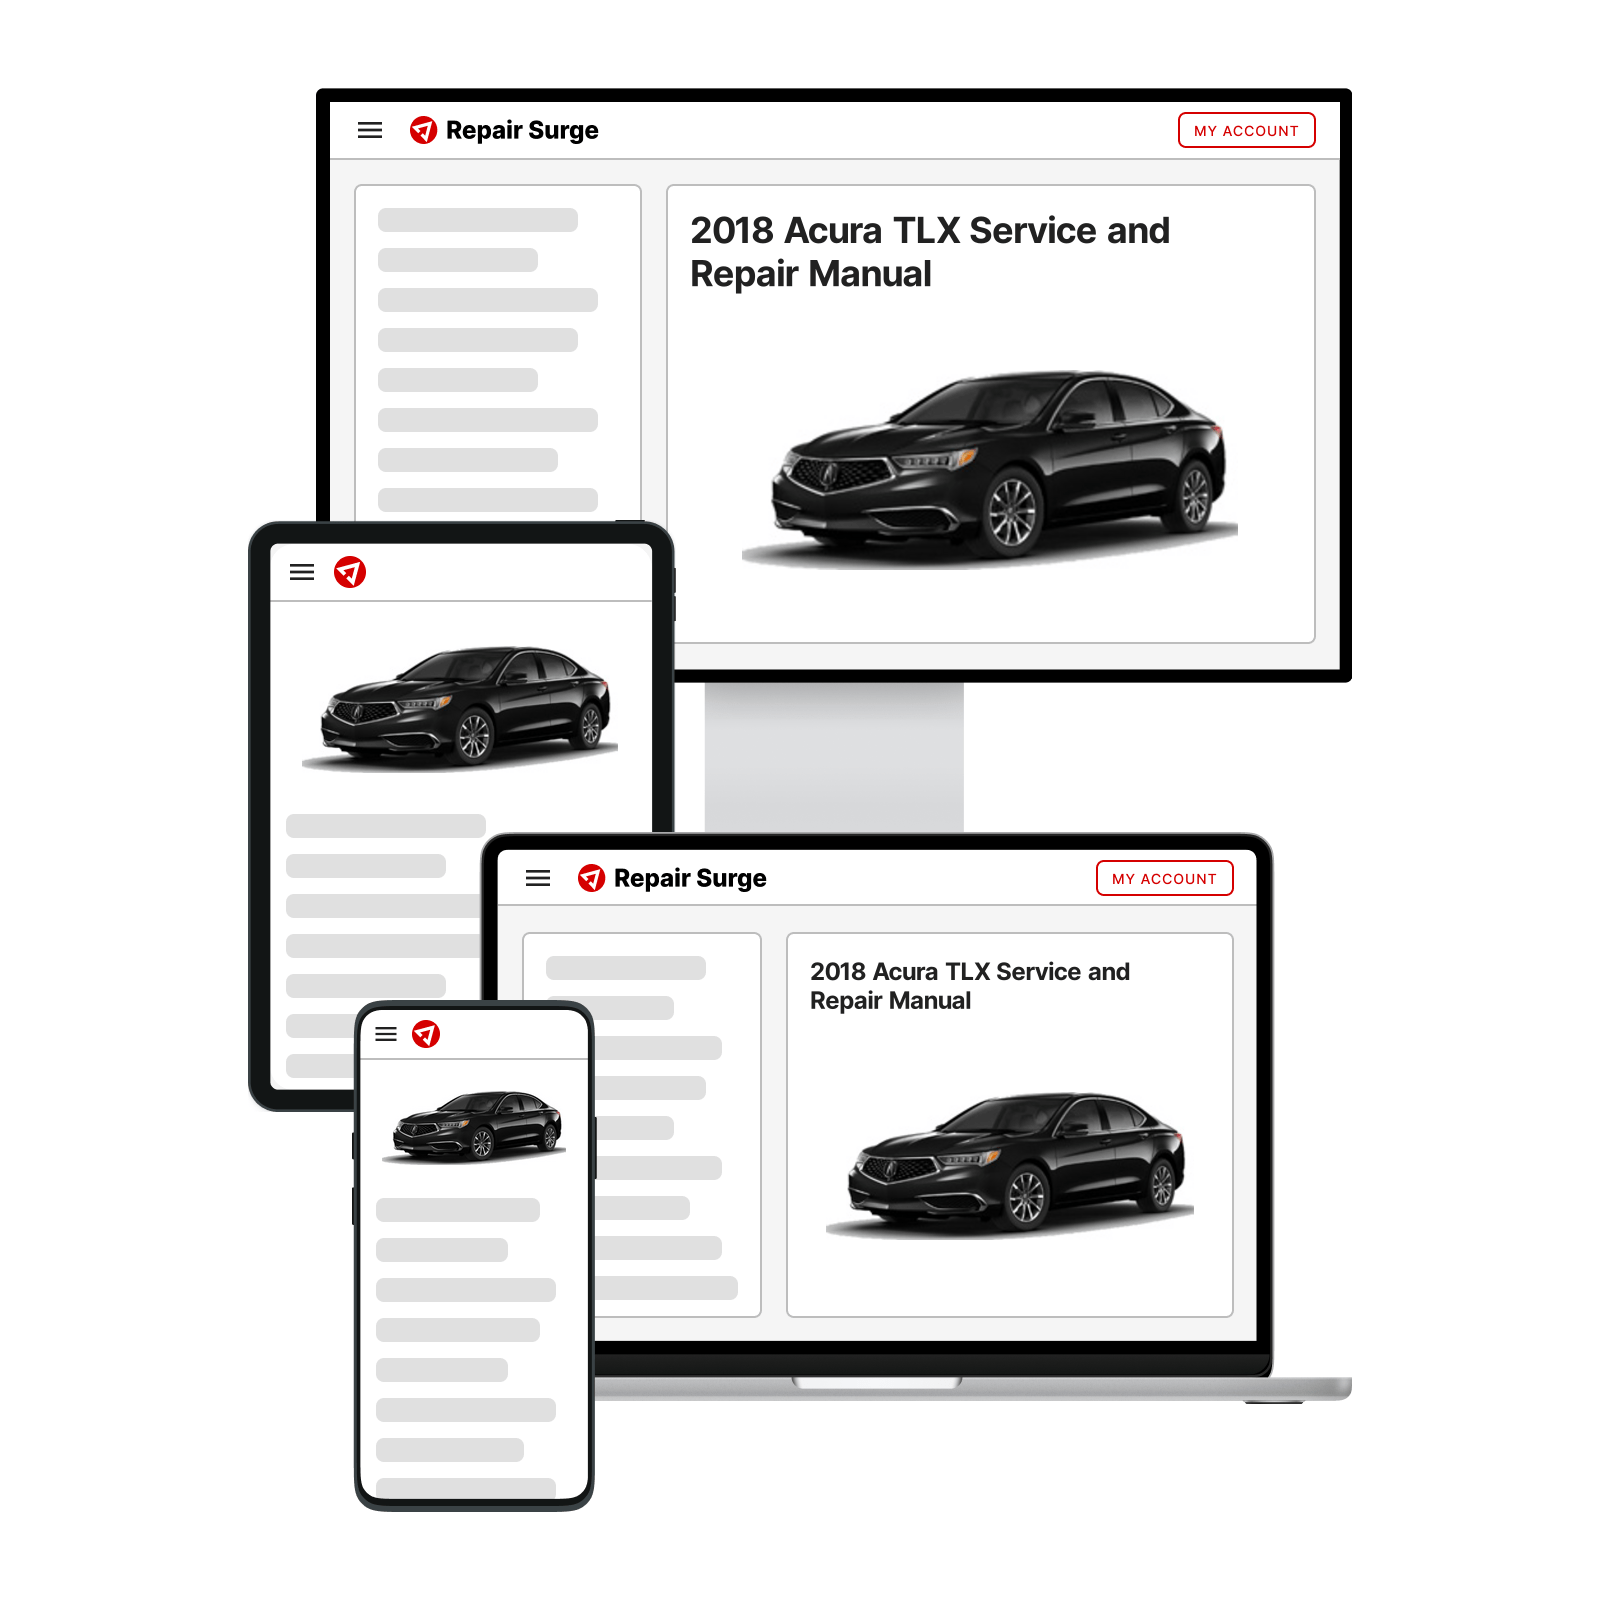 2018 Acura TLX service and repair manual hero image